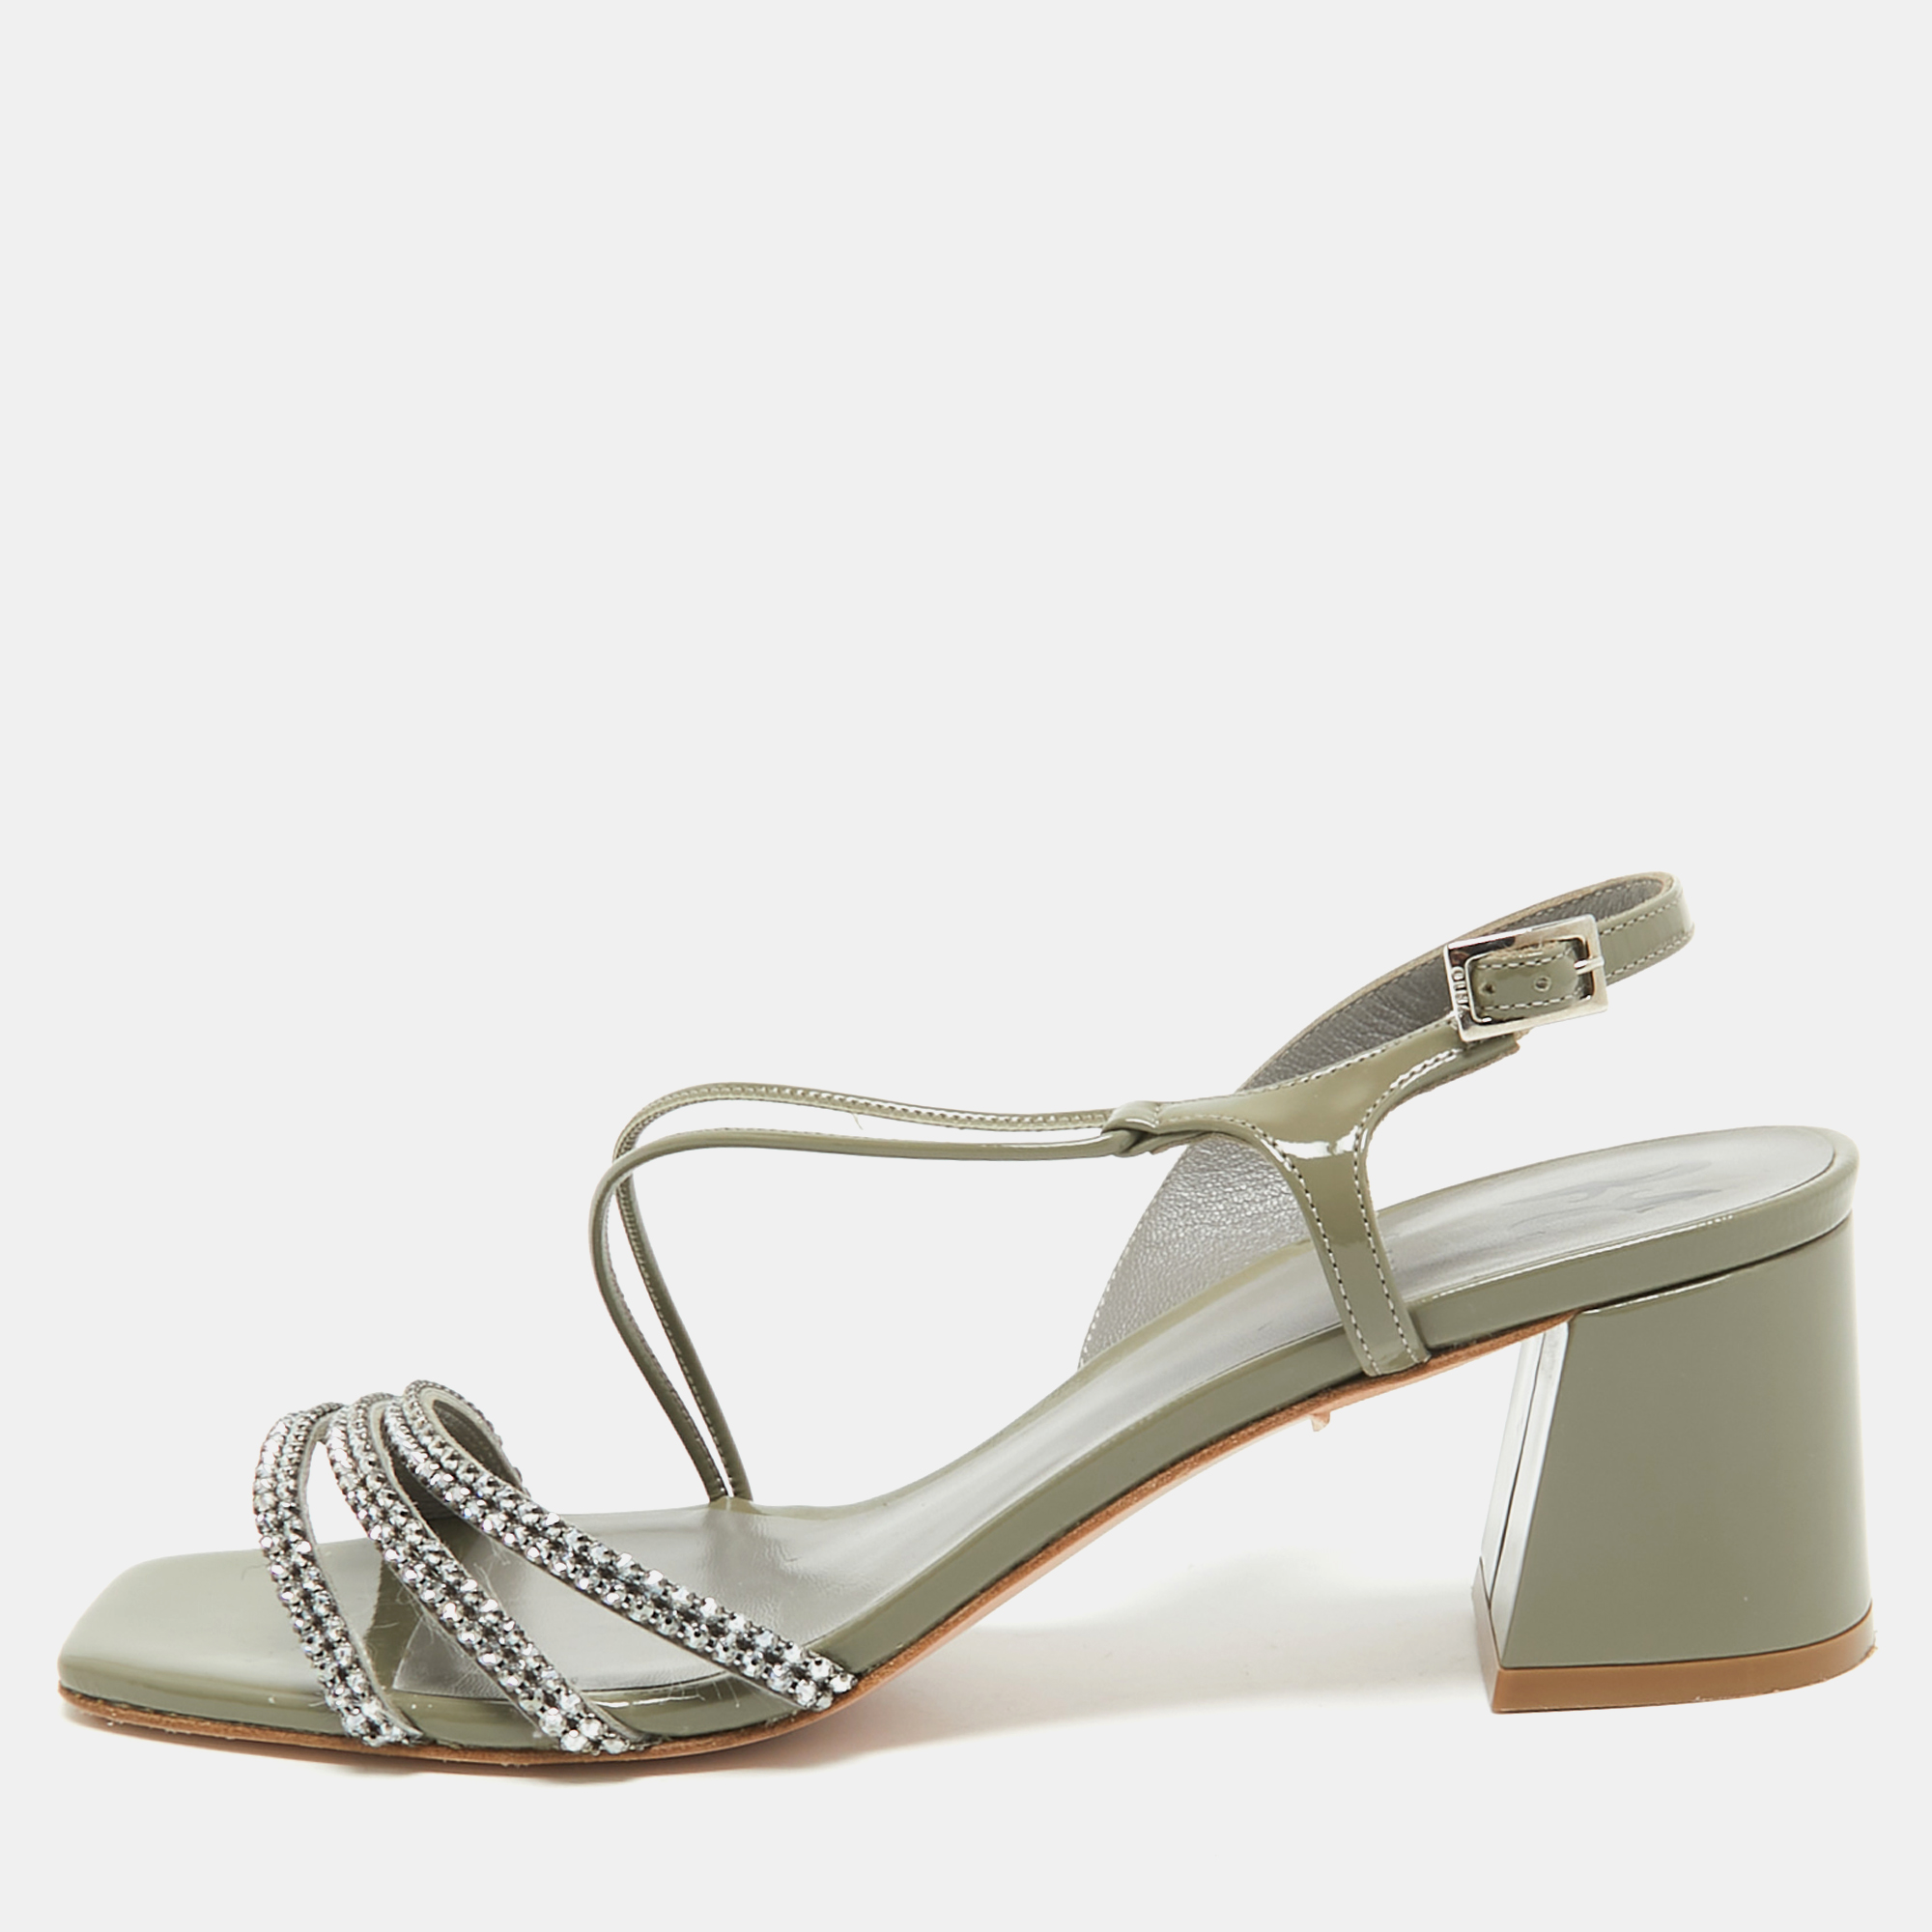 Gina grey patent leather crystal embellished slingback sandals size 37.5